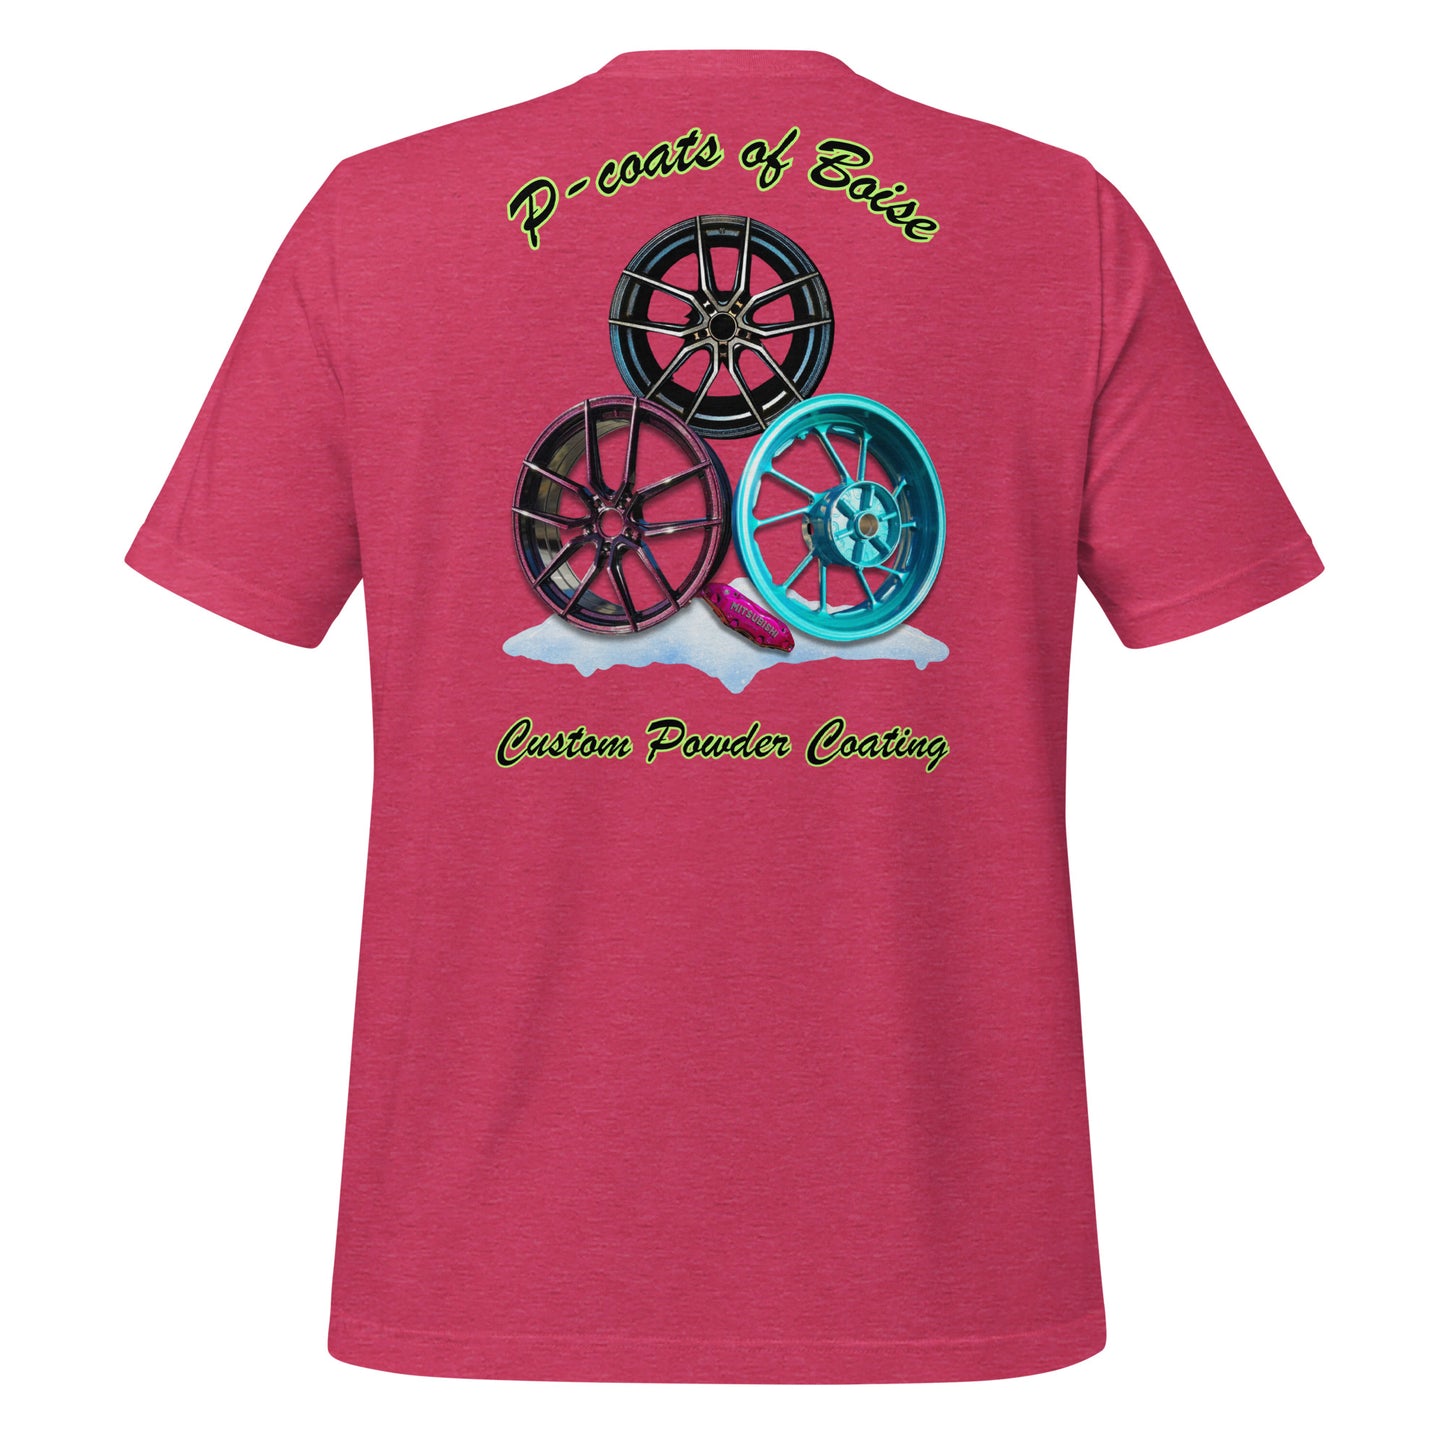 P-Coats of Boise 3 Wheel Design Unisex t-shirt